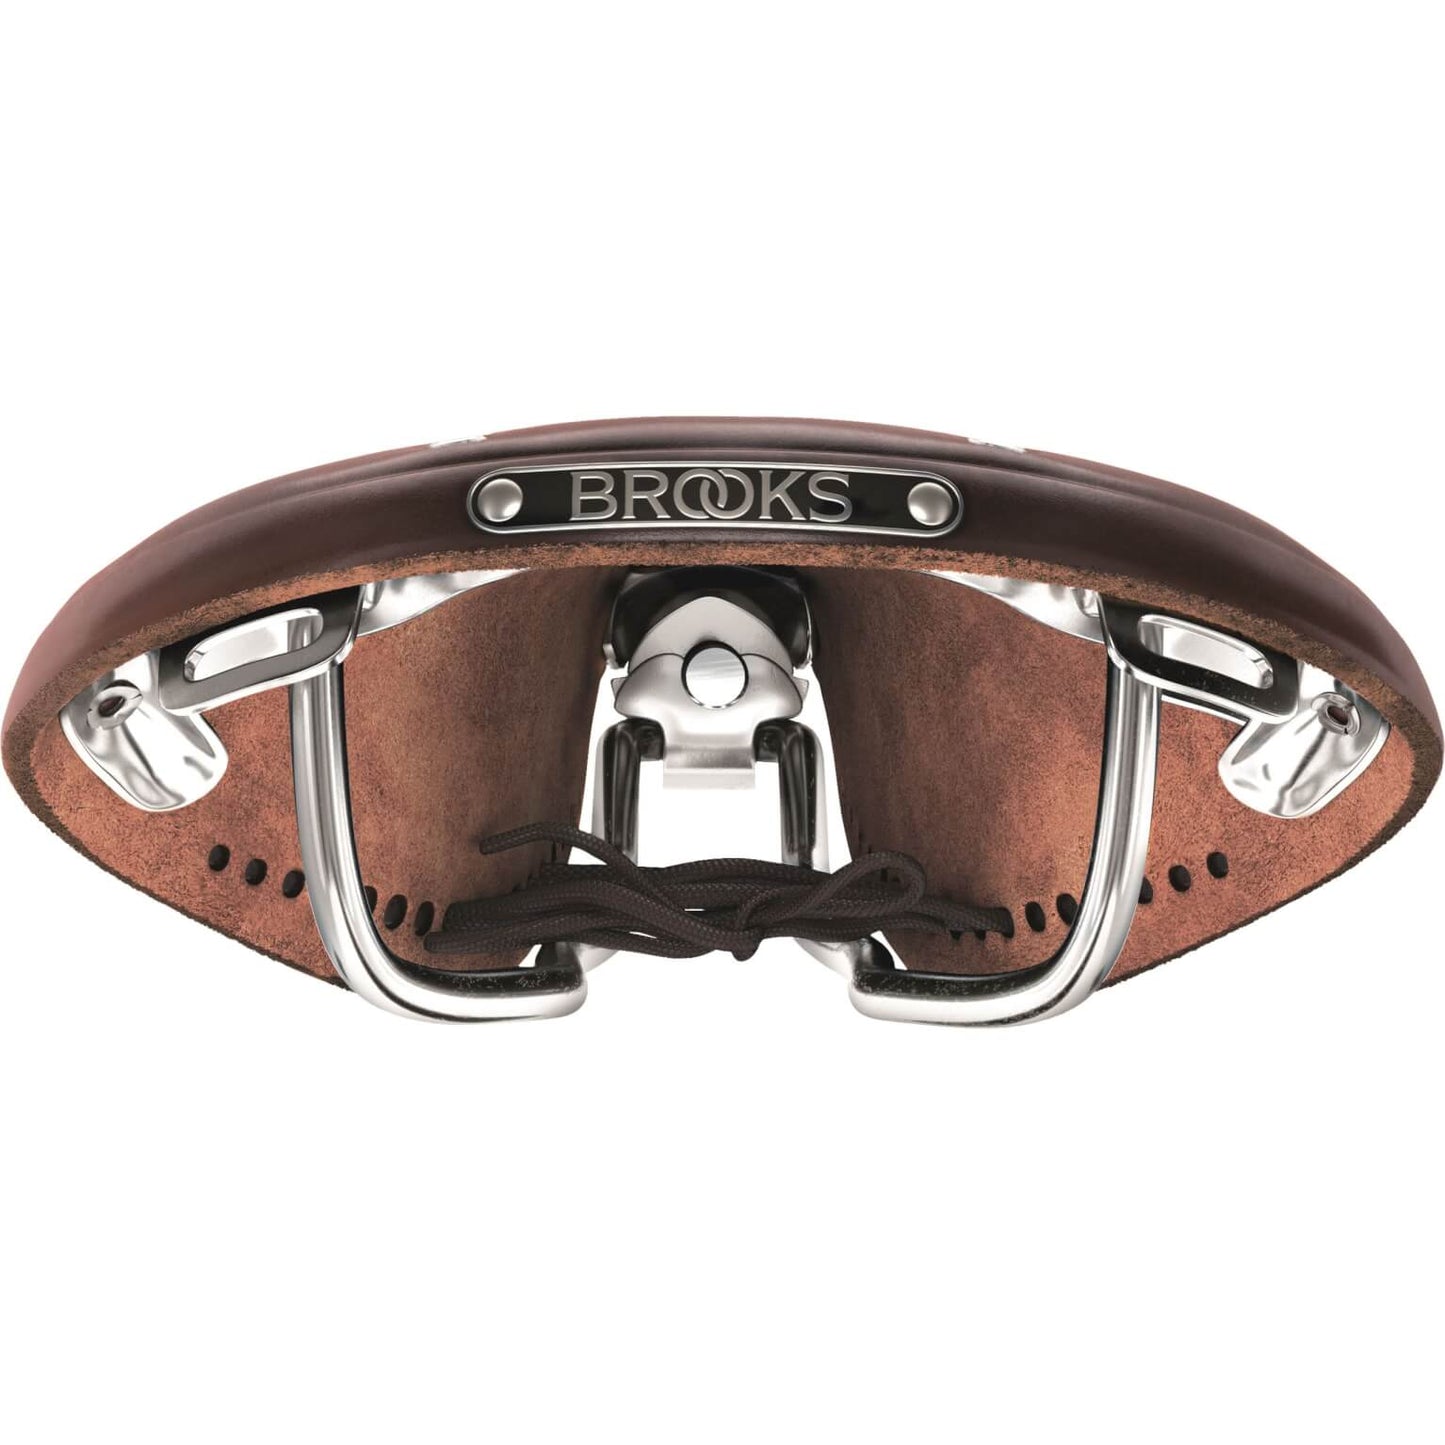 Brooks Saddle B17 Imperial Std Men Brown